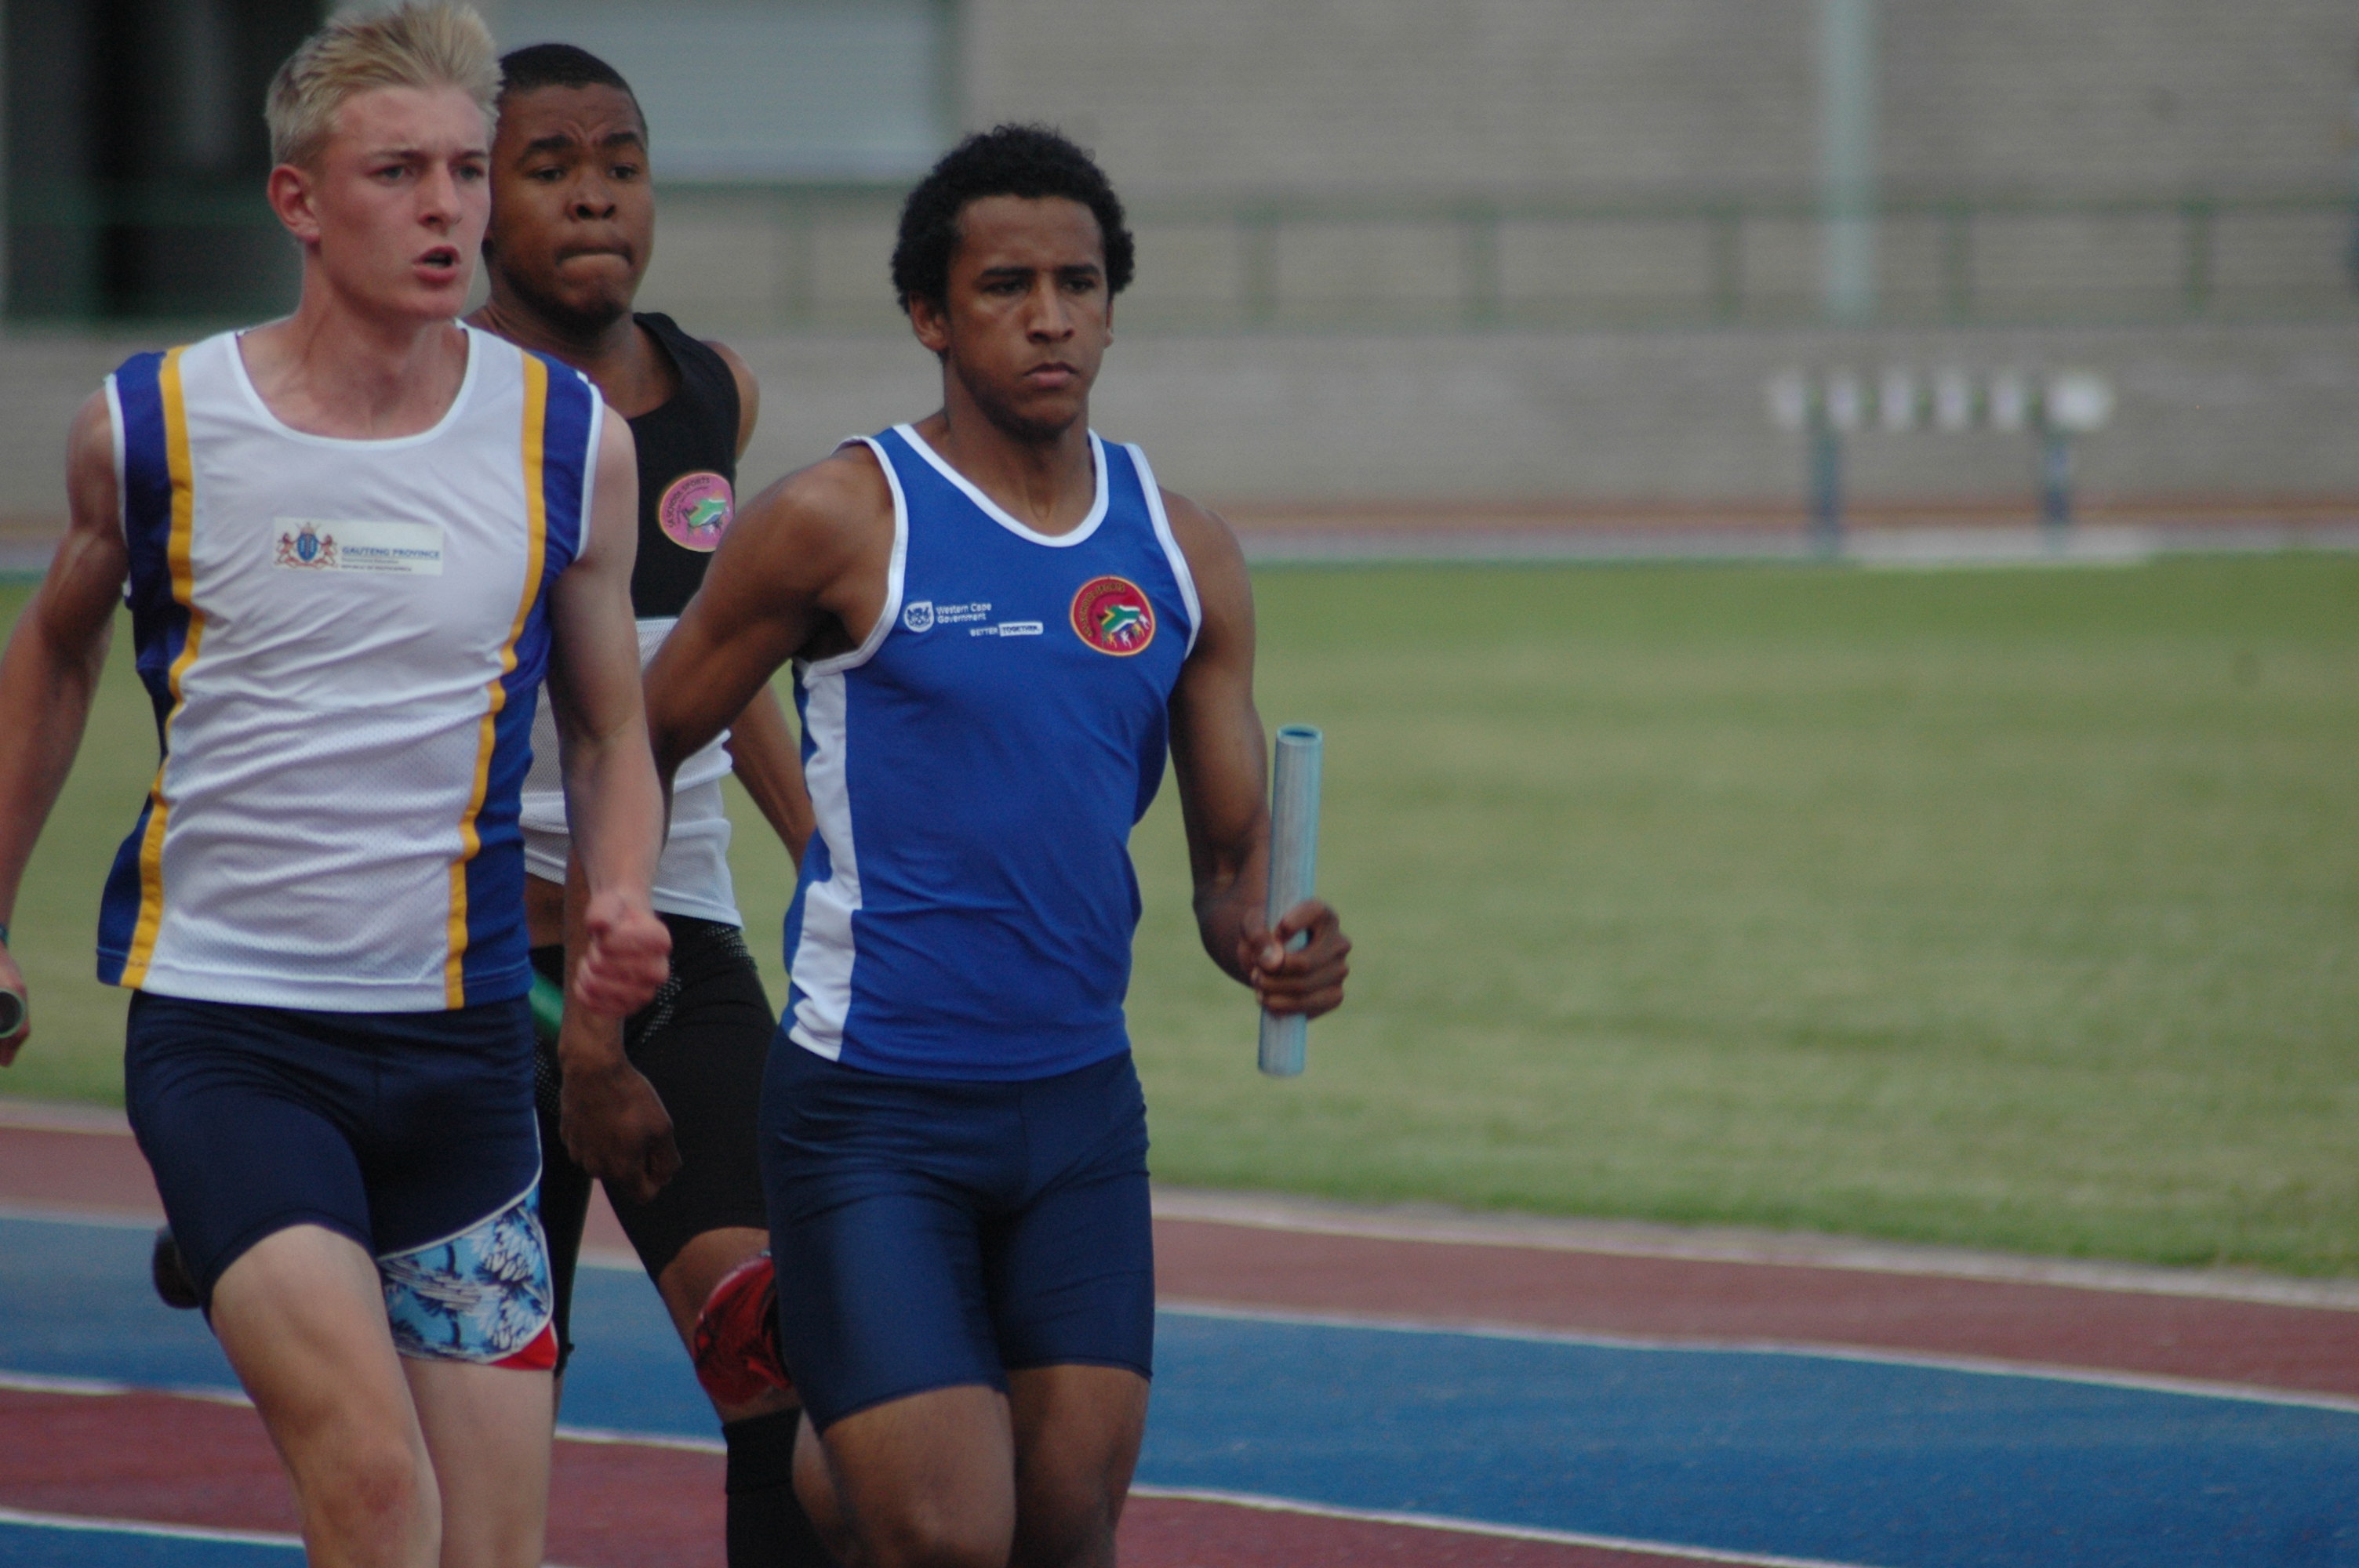 Under 17 Athlete Darryn Williams running in the medley event.